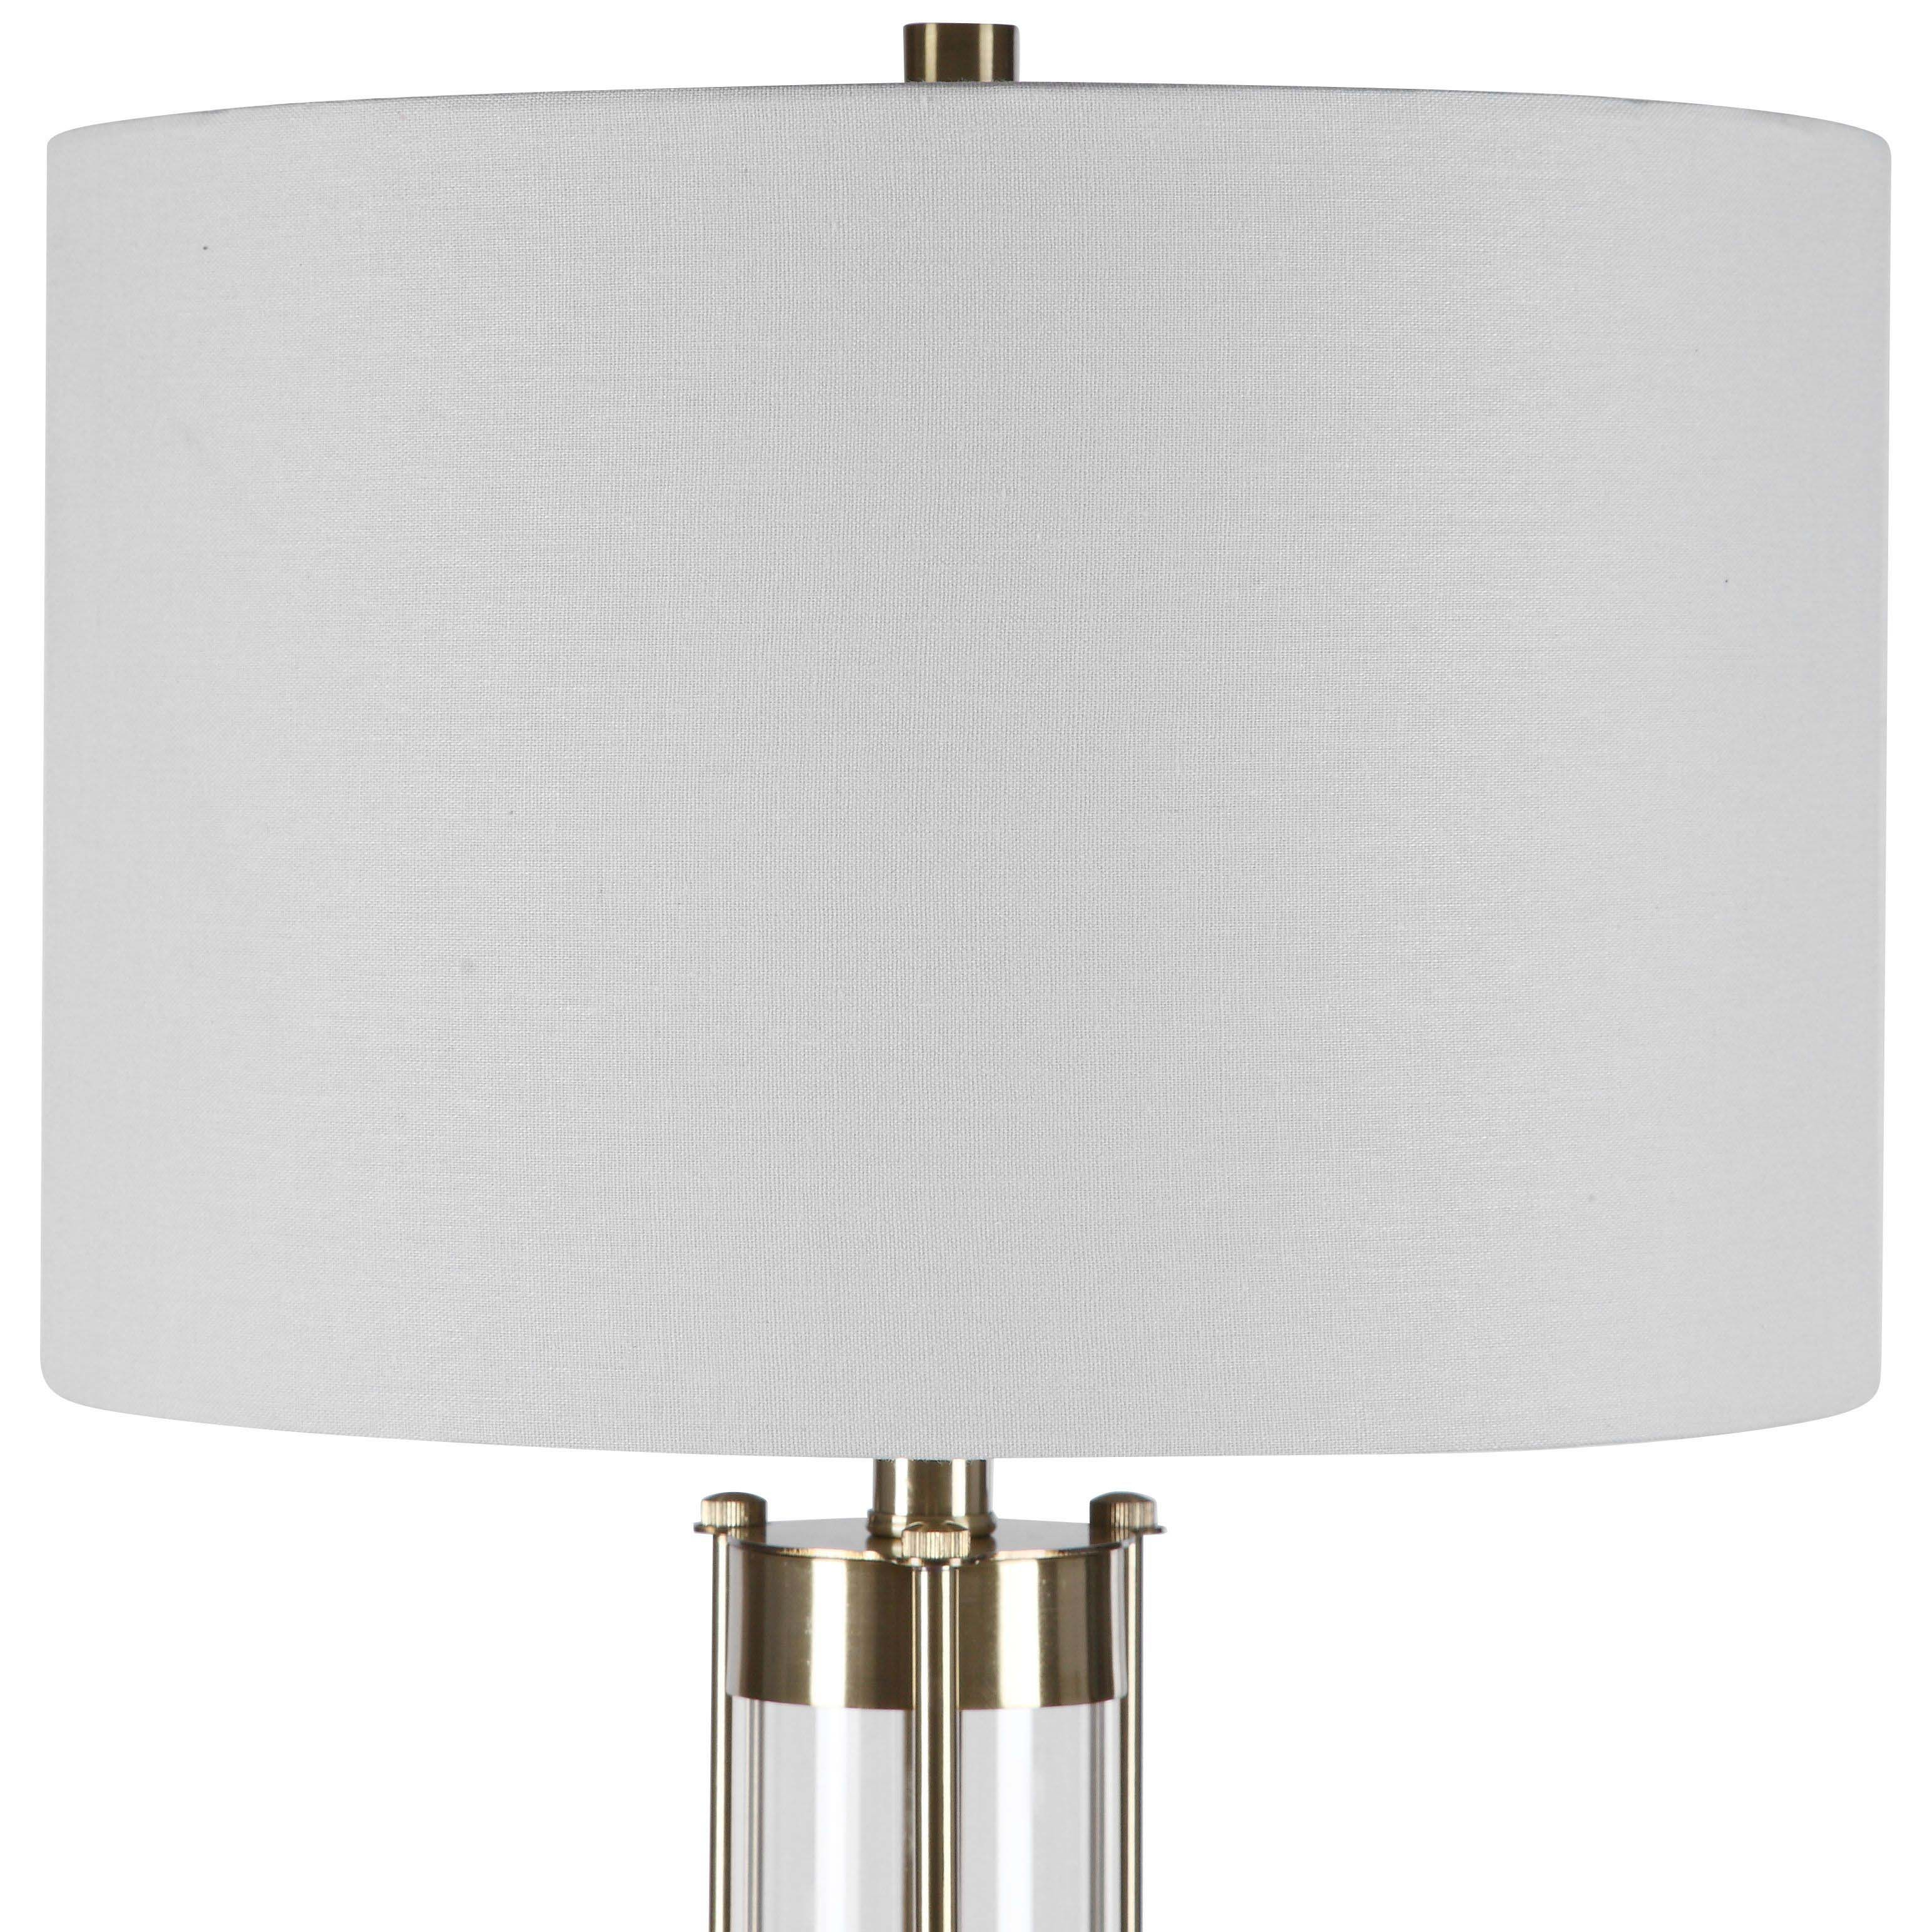 Decor Market Glass Base Table Lamp - Brass